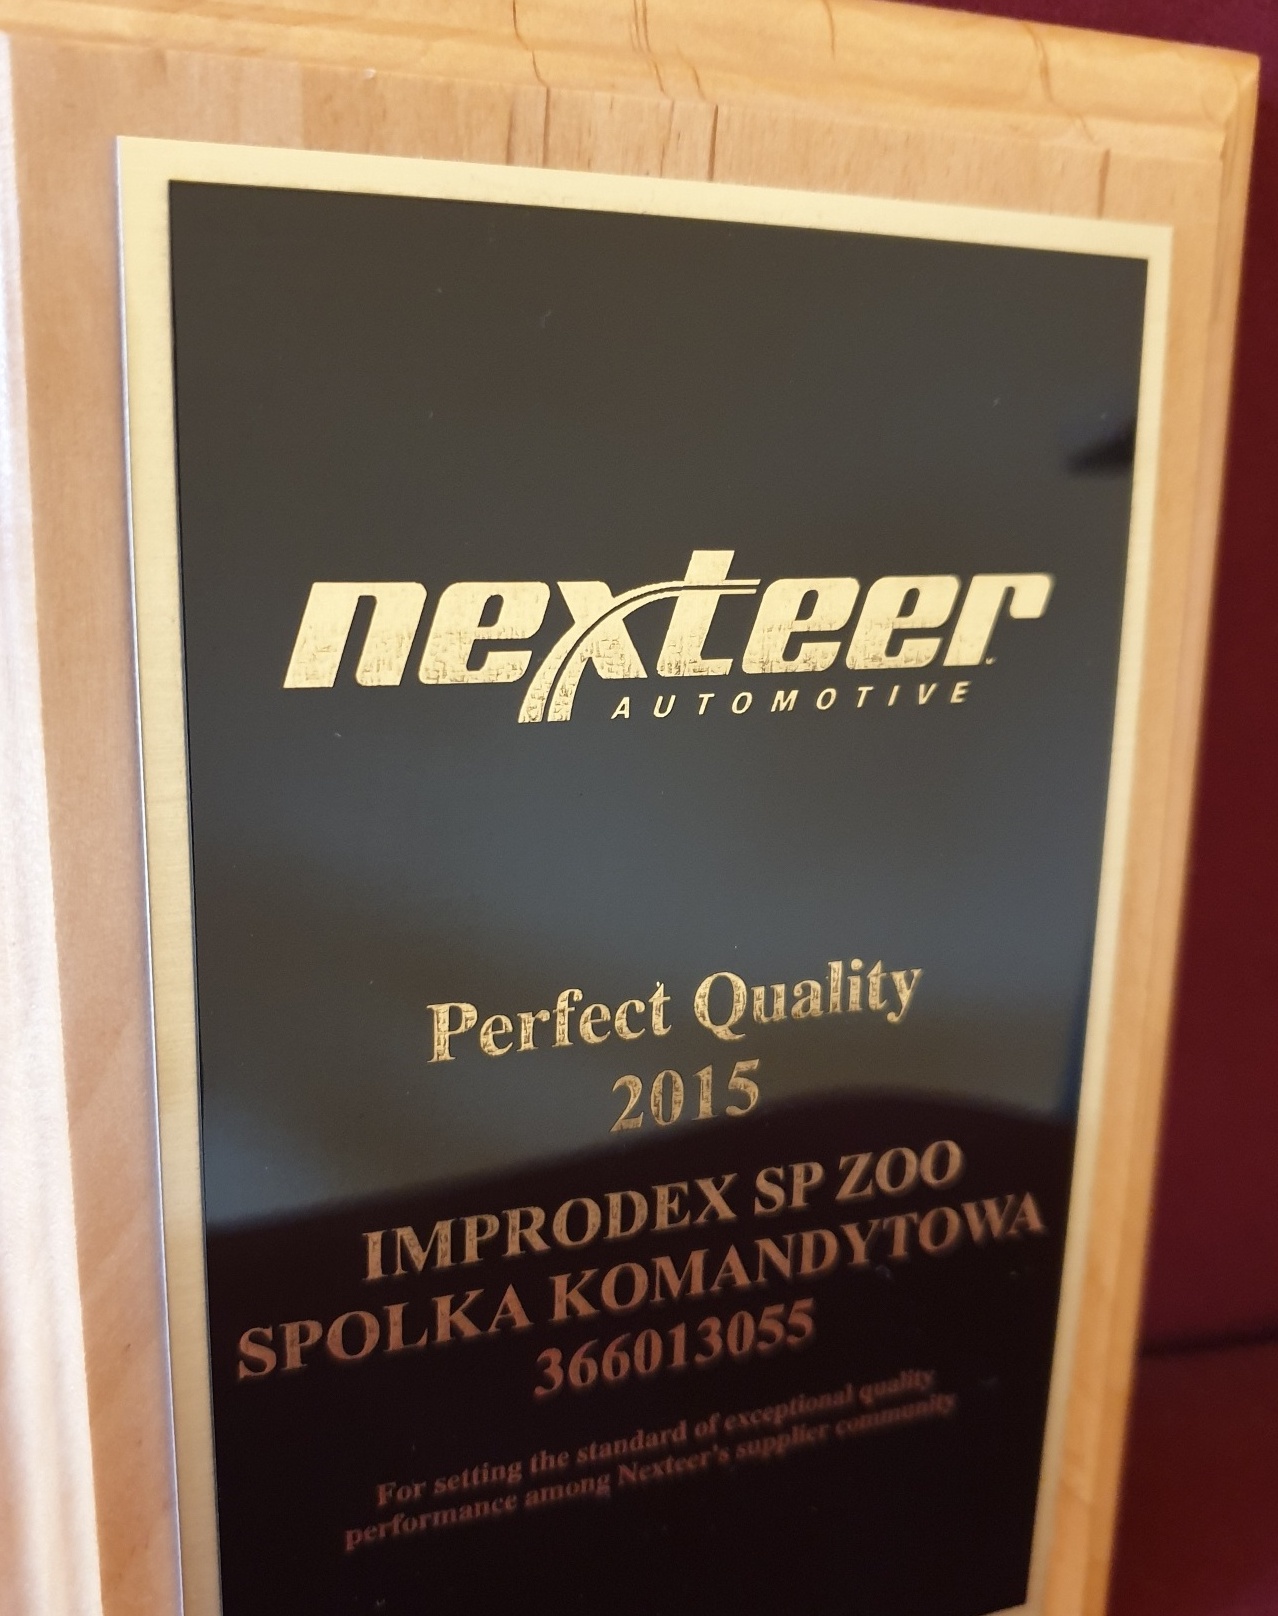 2015 - Trzecia nagroda od Nexteer